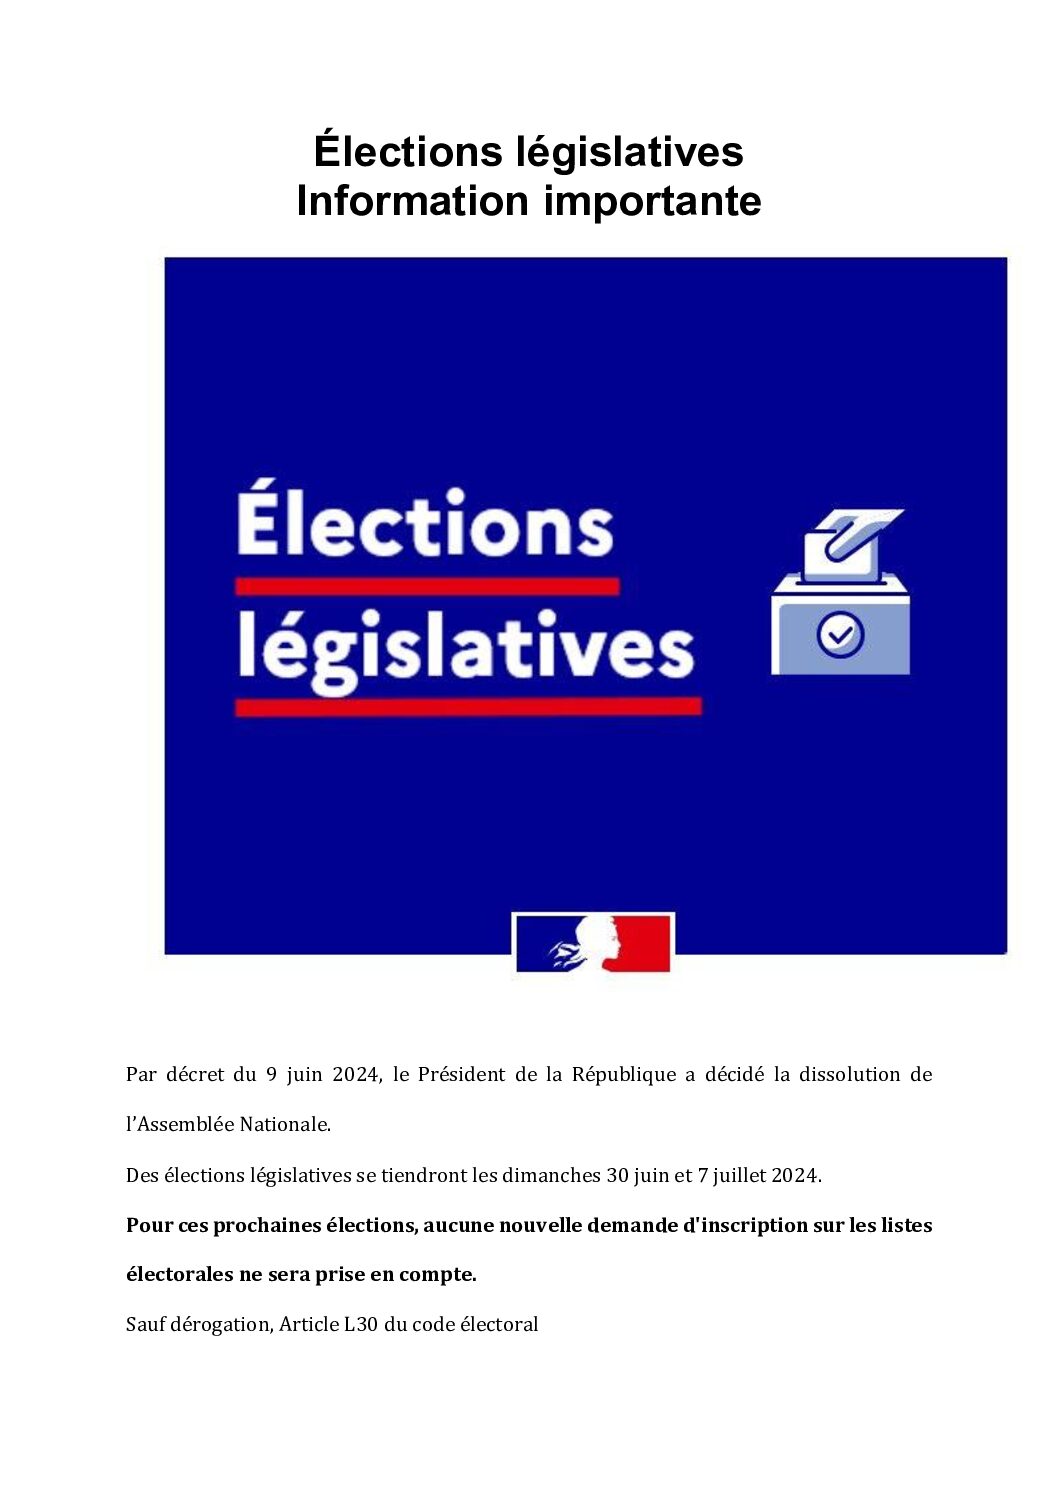 Elections législatives – Information